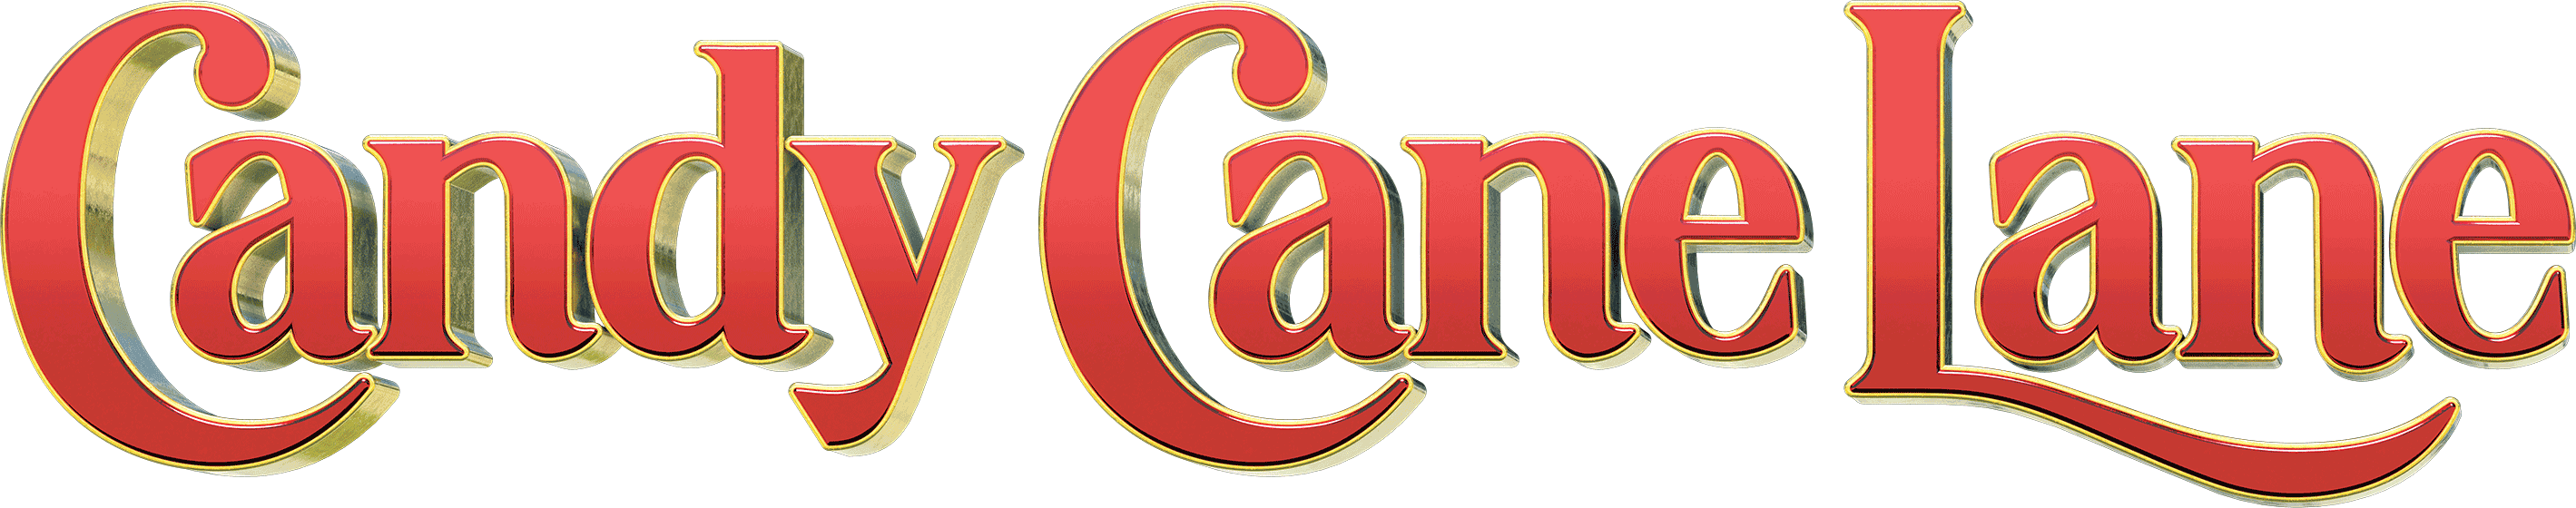 Candy Cane Lane logo